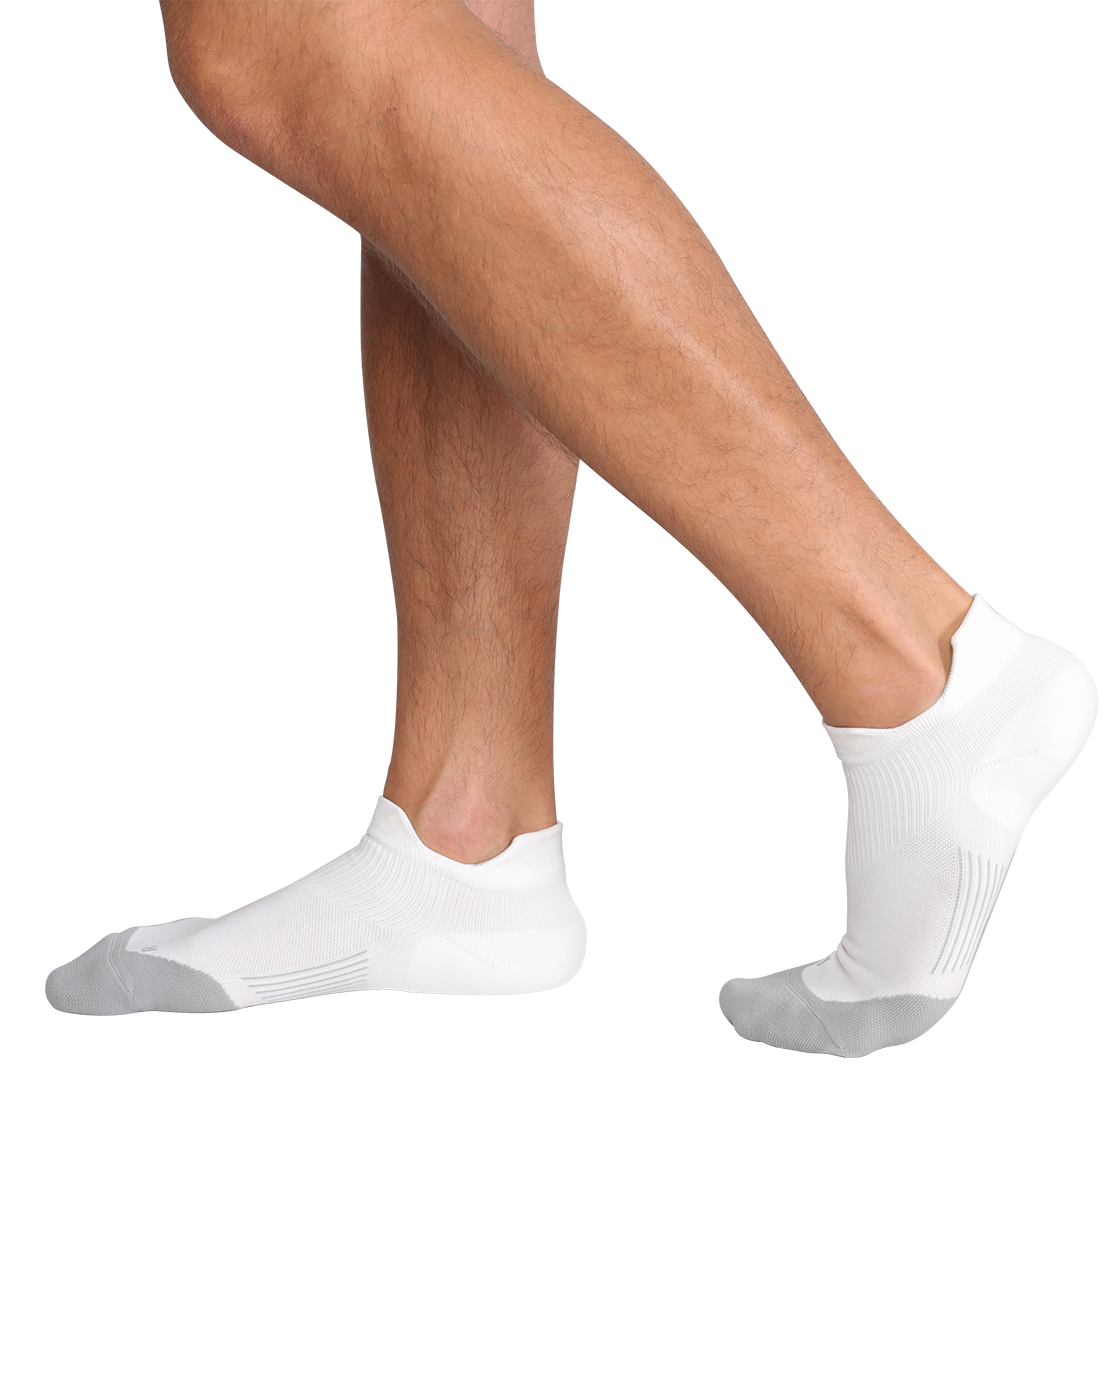 Mens Performance Socks – Sweat Wicking, All Purpose Socks|All Citizens M / Premium Men's Apparel by All Citizens | Gotham (Black)